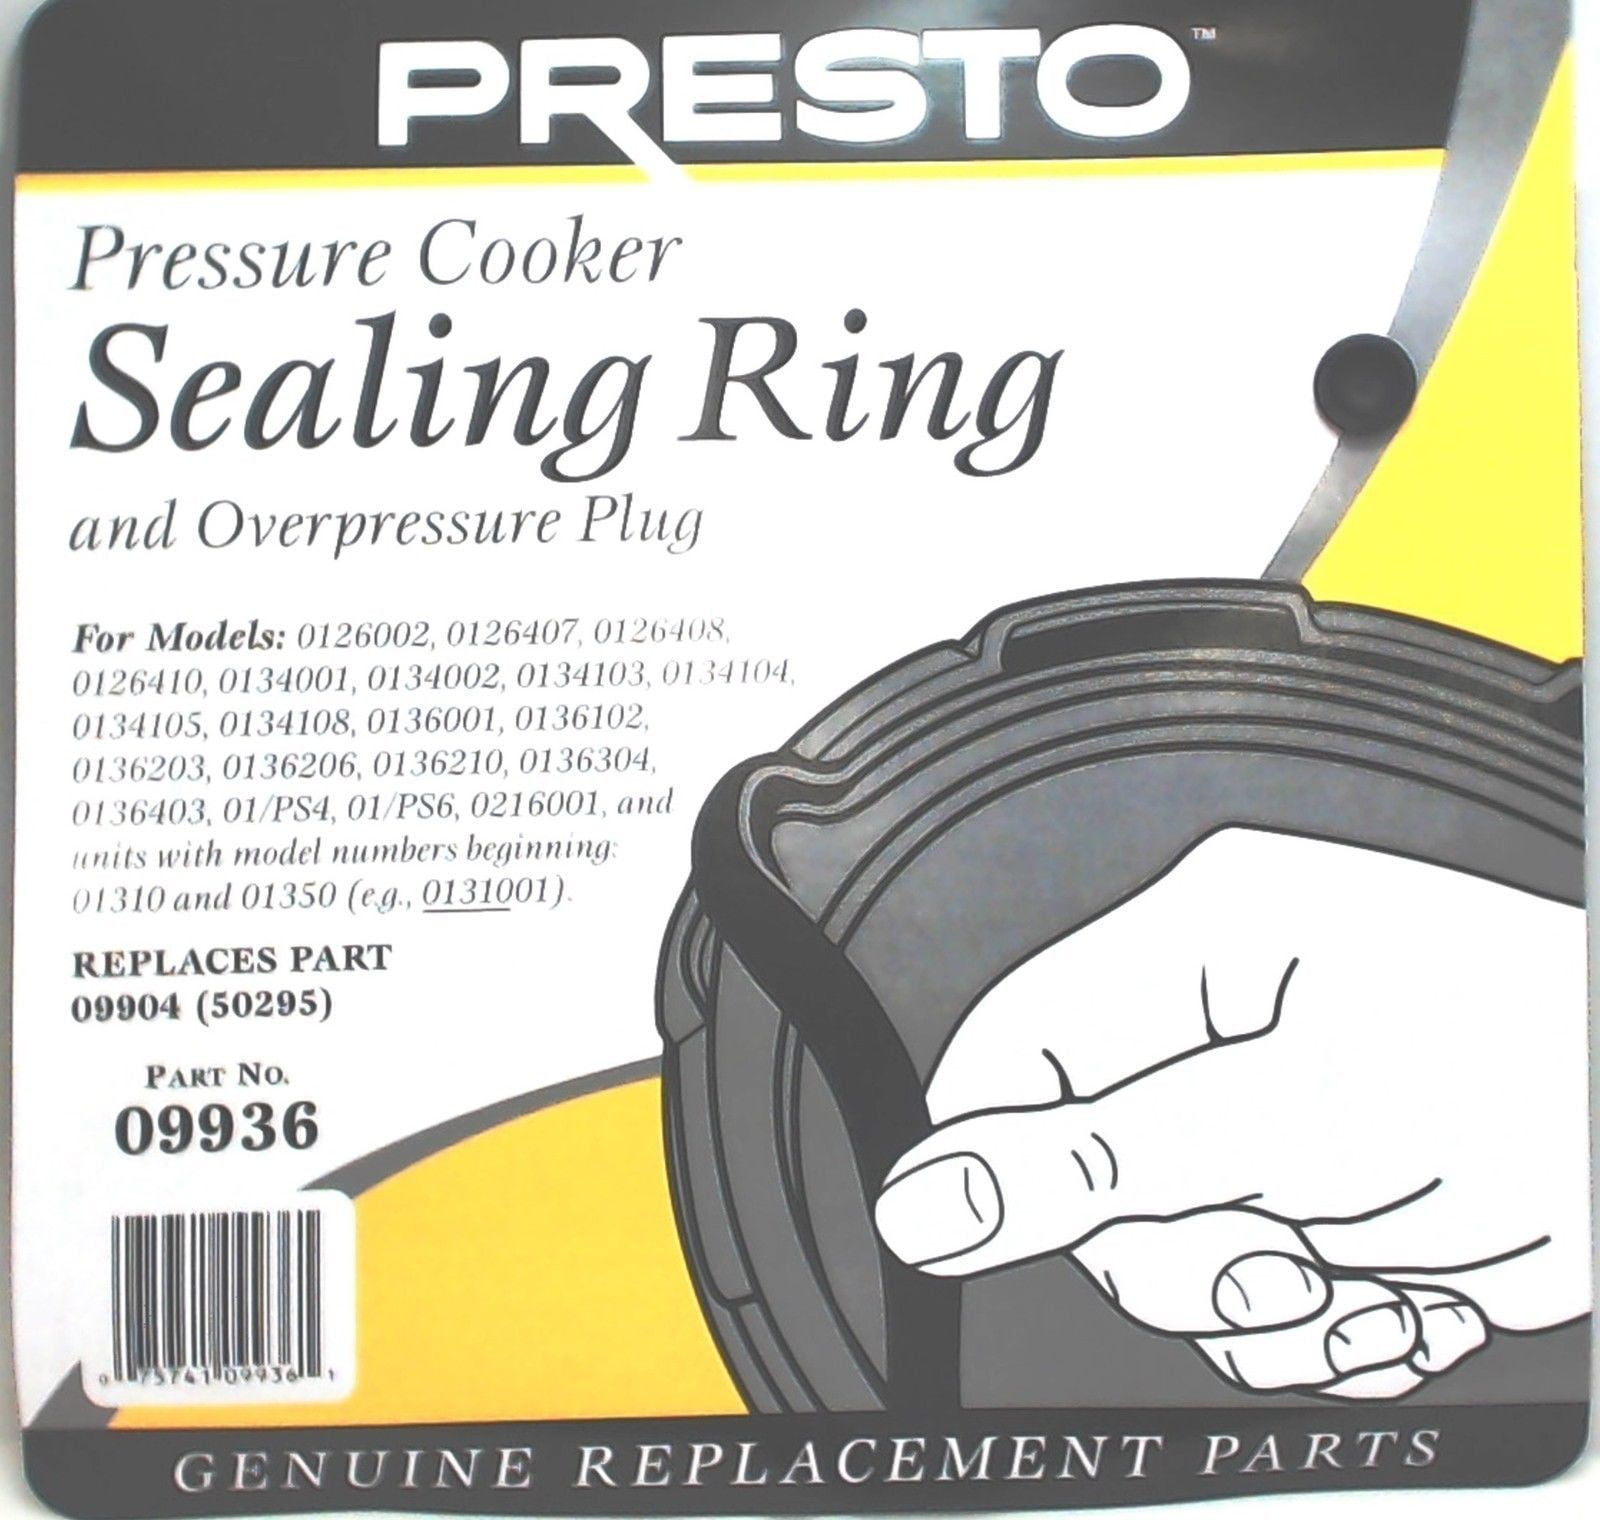 Pressure Cooker Sealing Ring Gasket Fits Presto 7AV Models 09907 